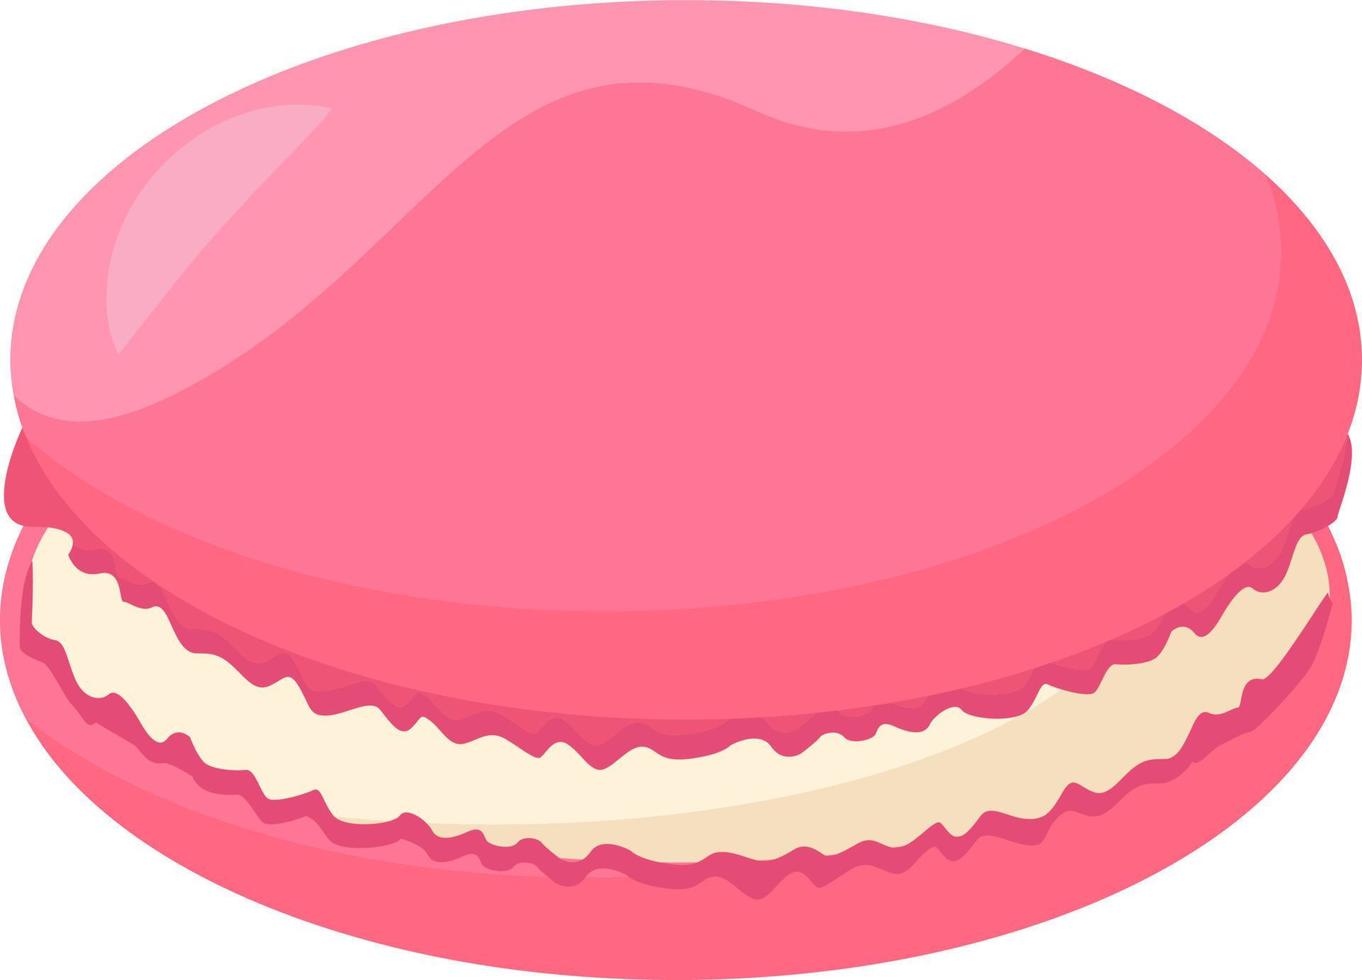 macaron rosa, ilustración, vector sobre fondo blanco.